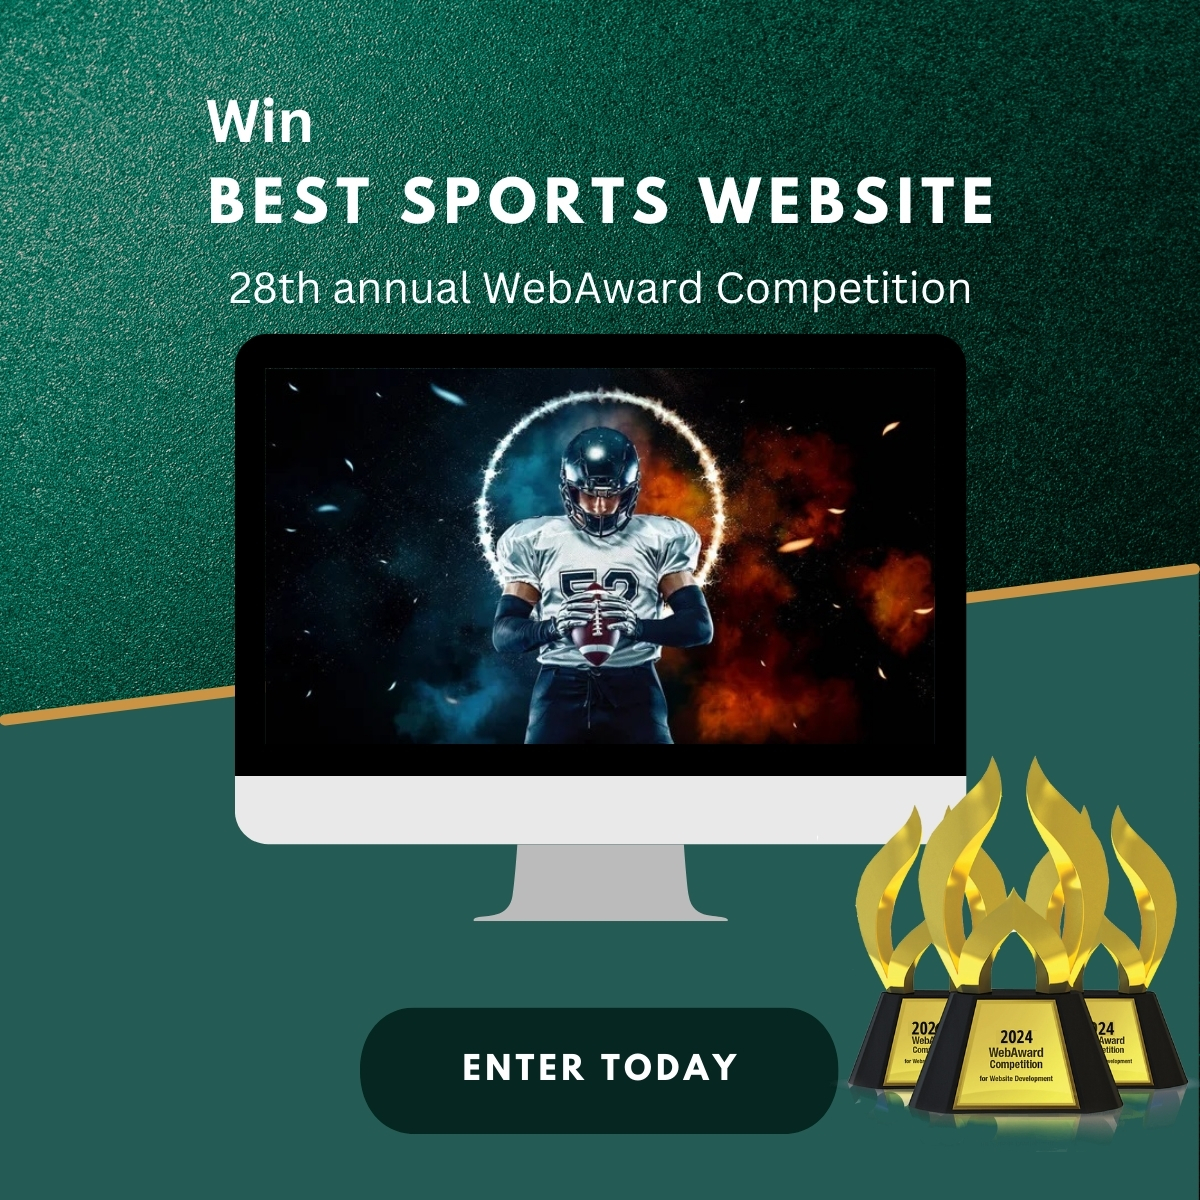 Score Big & Win Best Sports Website at @WebMarketAssoc 28th #WebAward for #WebsiteDevelopment at WebAward.org Enter by 5.31.24.
#Sports #SportsMarketing #SportsNews #SportsTrends #Sportswebsites #BestSportsWebsite #SportsIndustry #SportsManagement #SportsIndustry